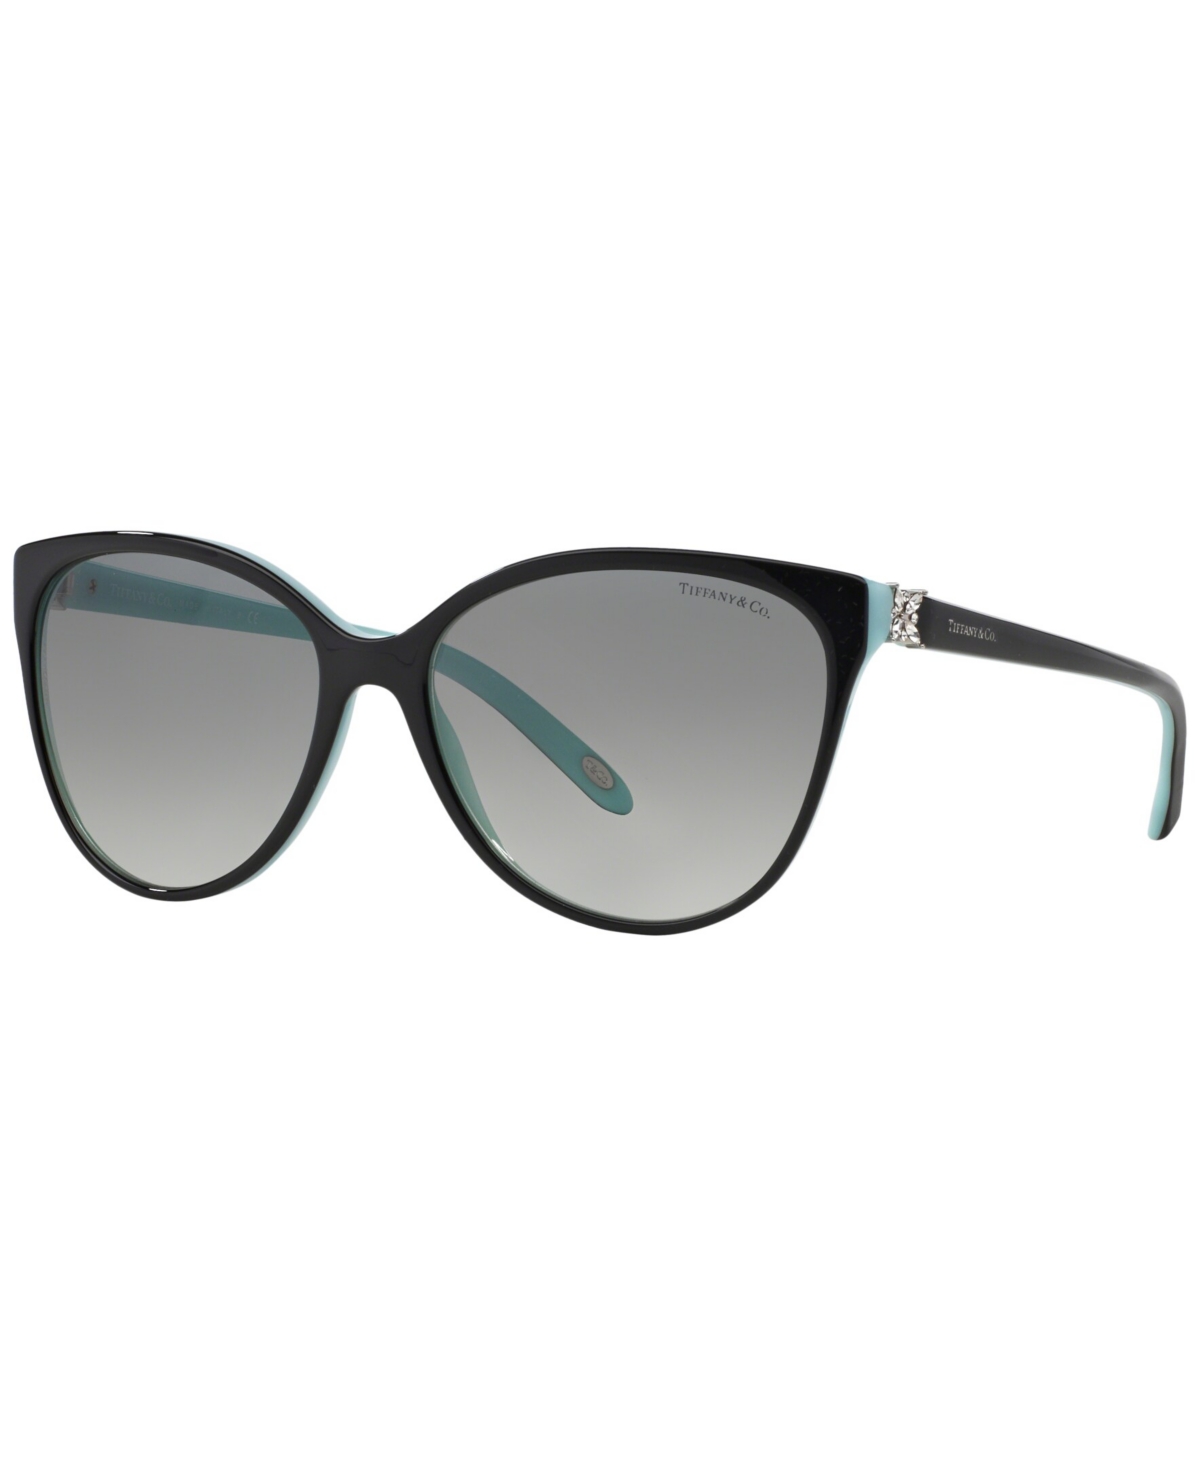 Tiffany & Co Women's Sunglasses, Tf4089b In Black On Tiffany Blue